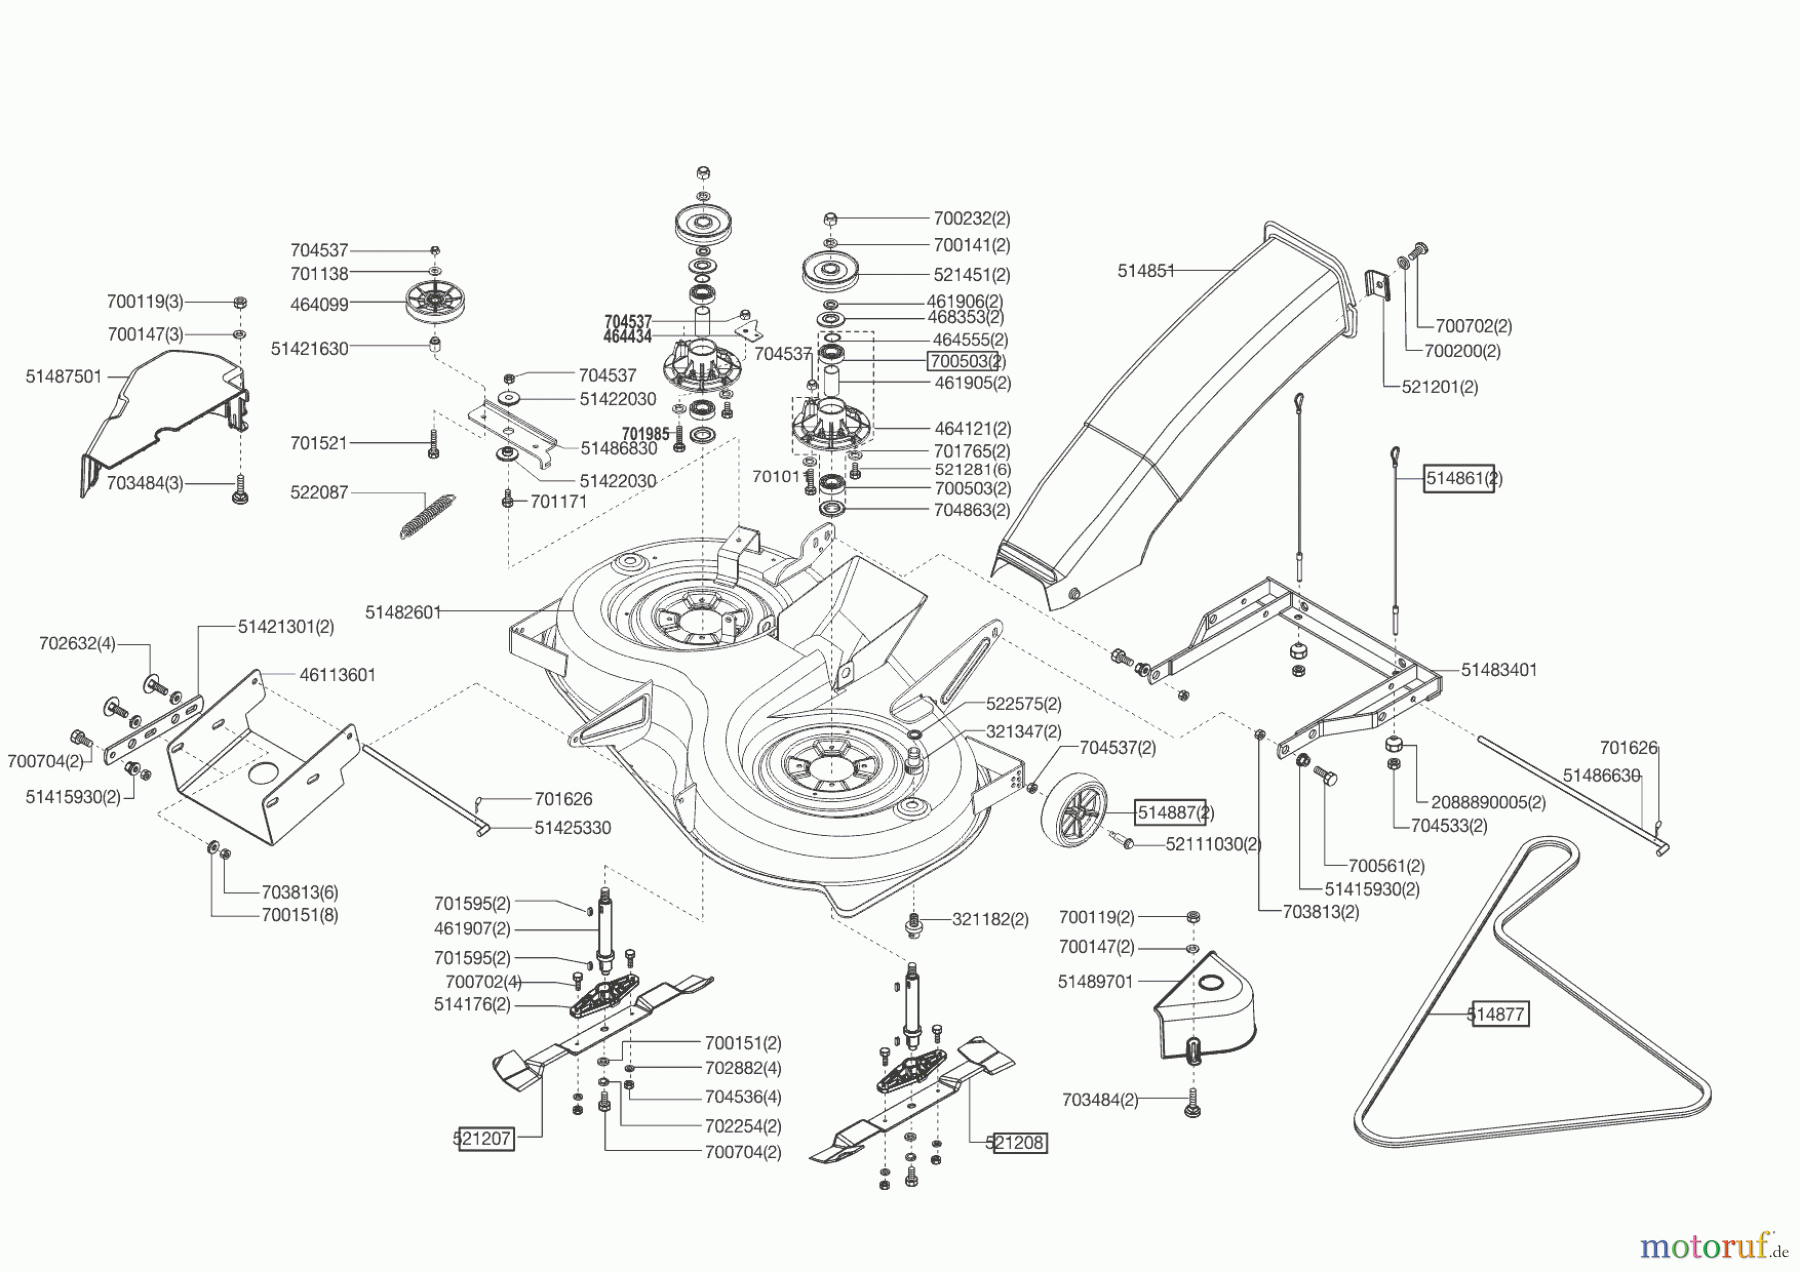  AL-KO Gartentechnik Rasentraktor T 20-102 HD Gulistan  03/2015 - 09/2016 Seite 5